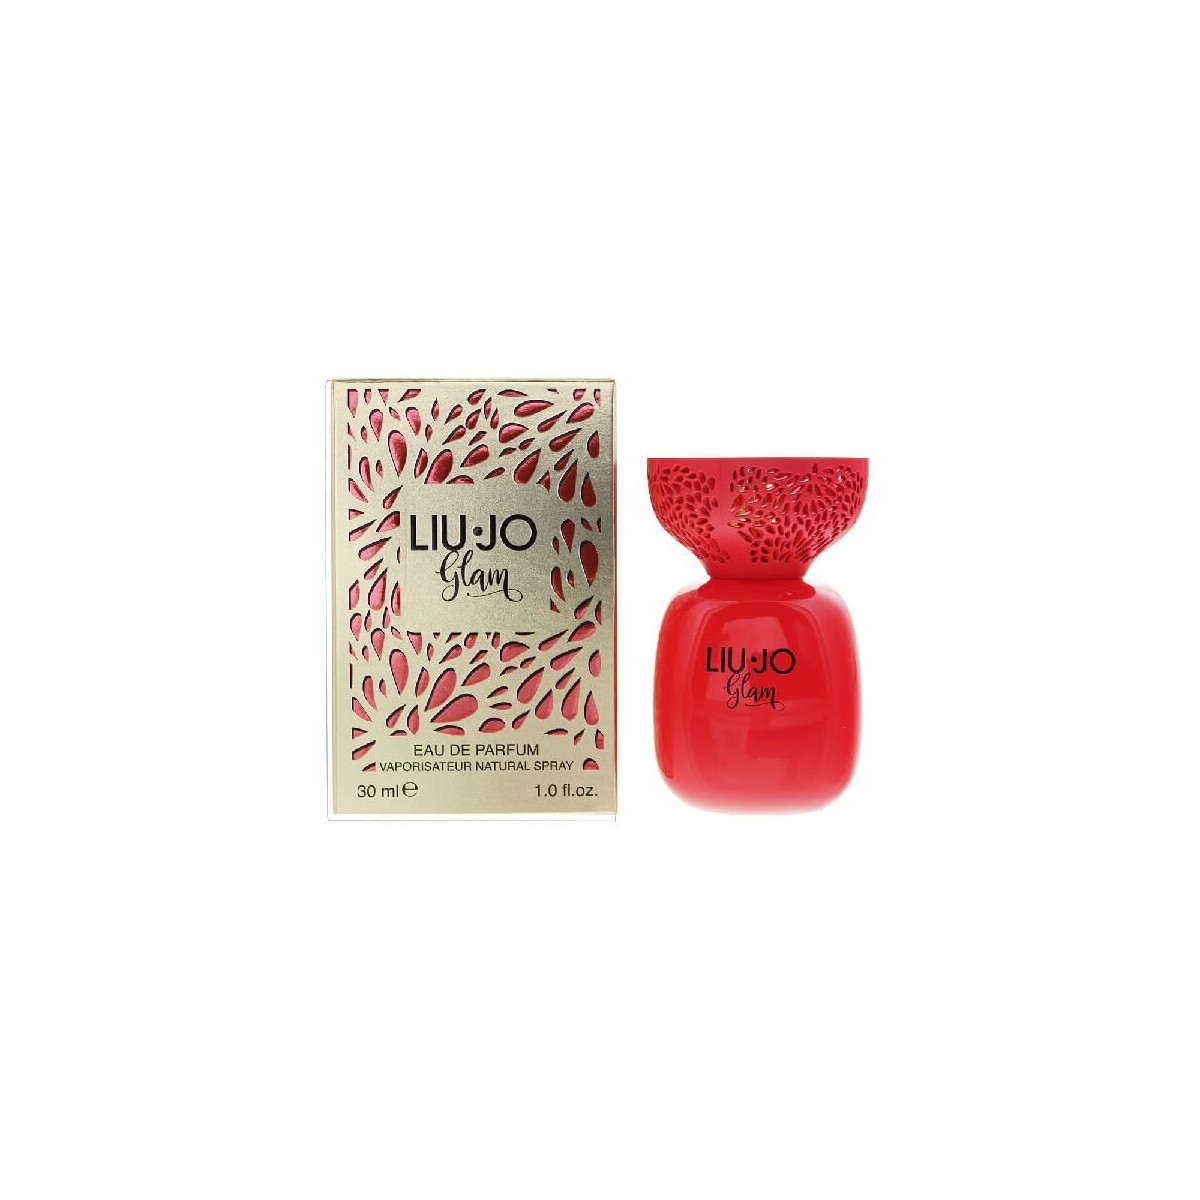 Liu Jo Glam Donna Eau de Parfum Fragranze Femminile 30ml spray